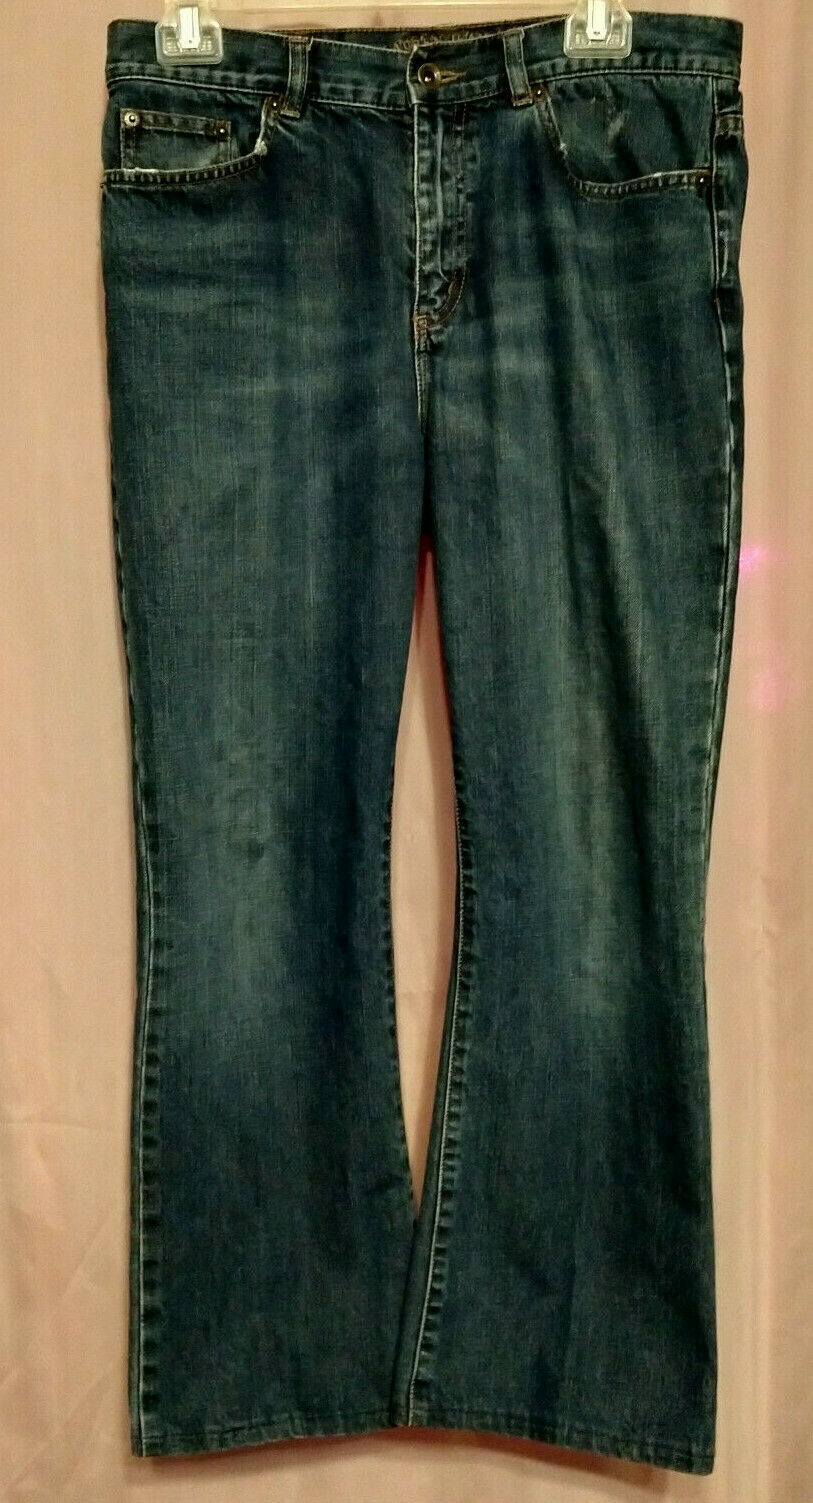 Primary image for Lauren Jeans Co Premium Jeans Size 10P Inseam 26"